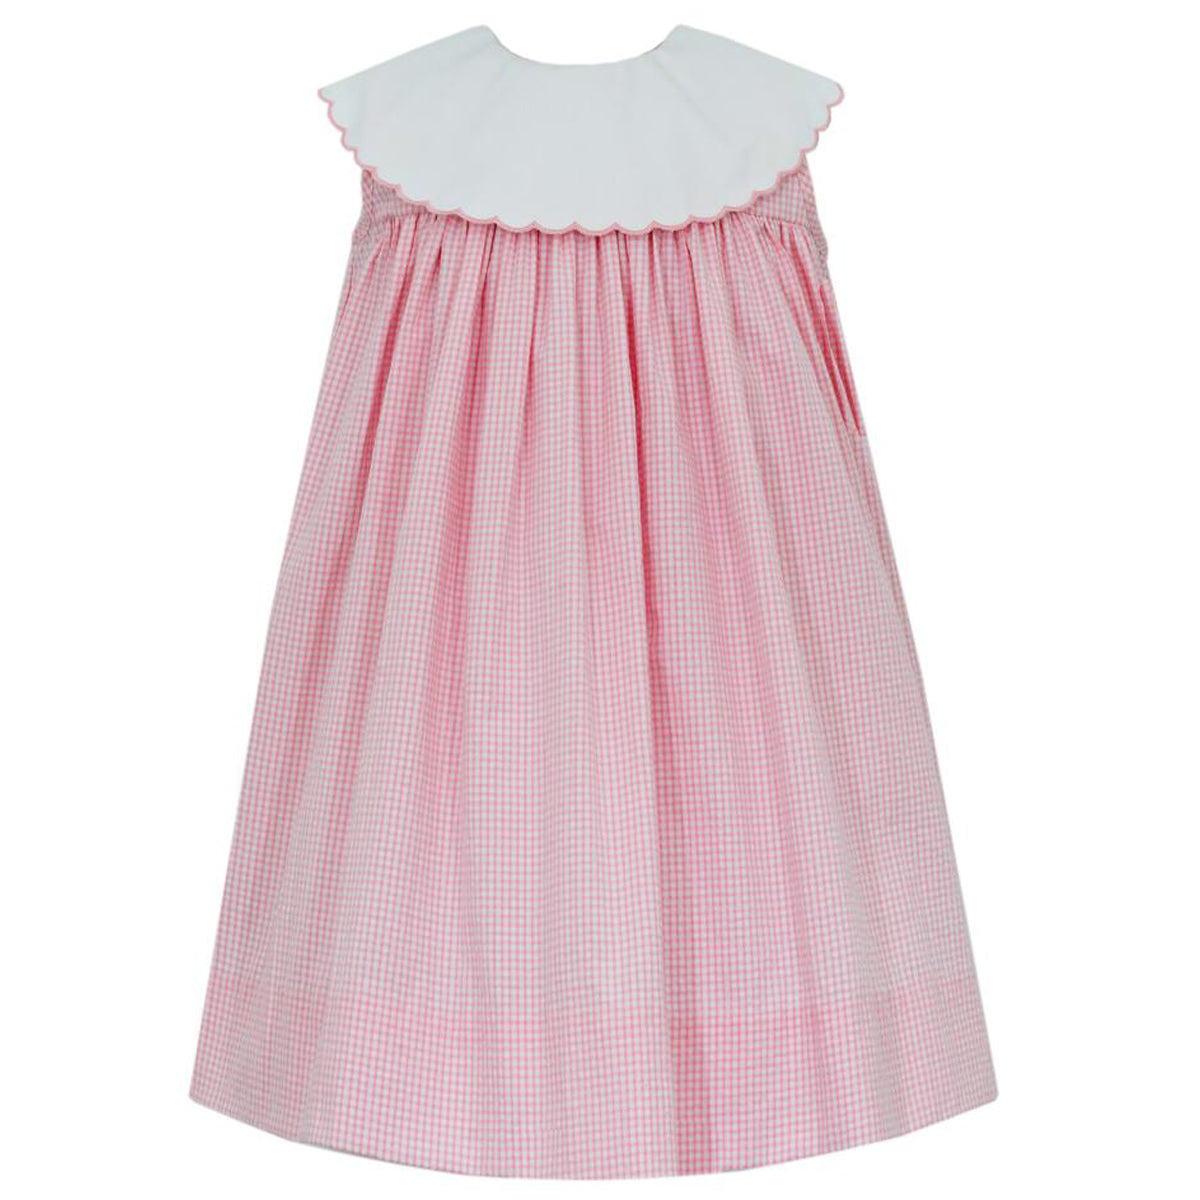 Pink Seersucker Gingham Float Dress w/ Scalloped Collar